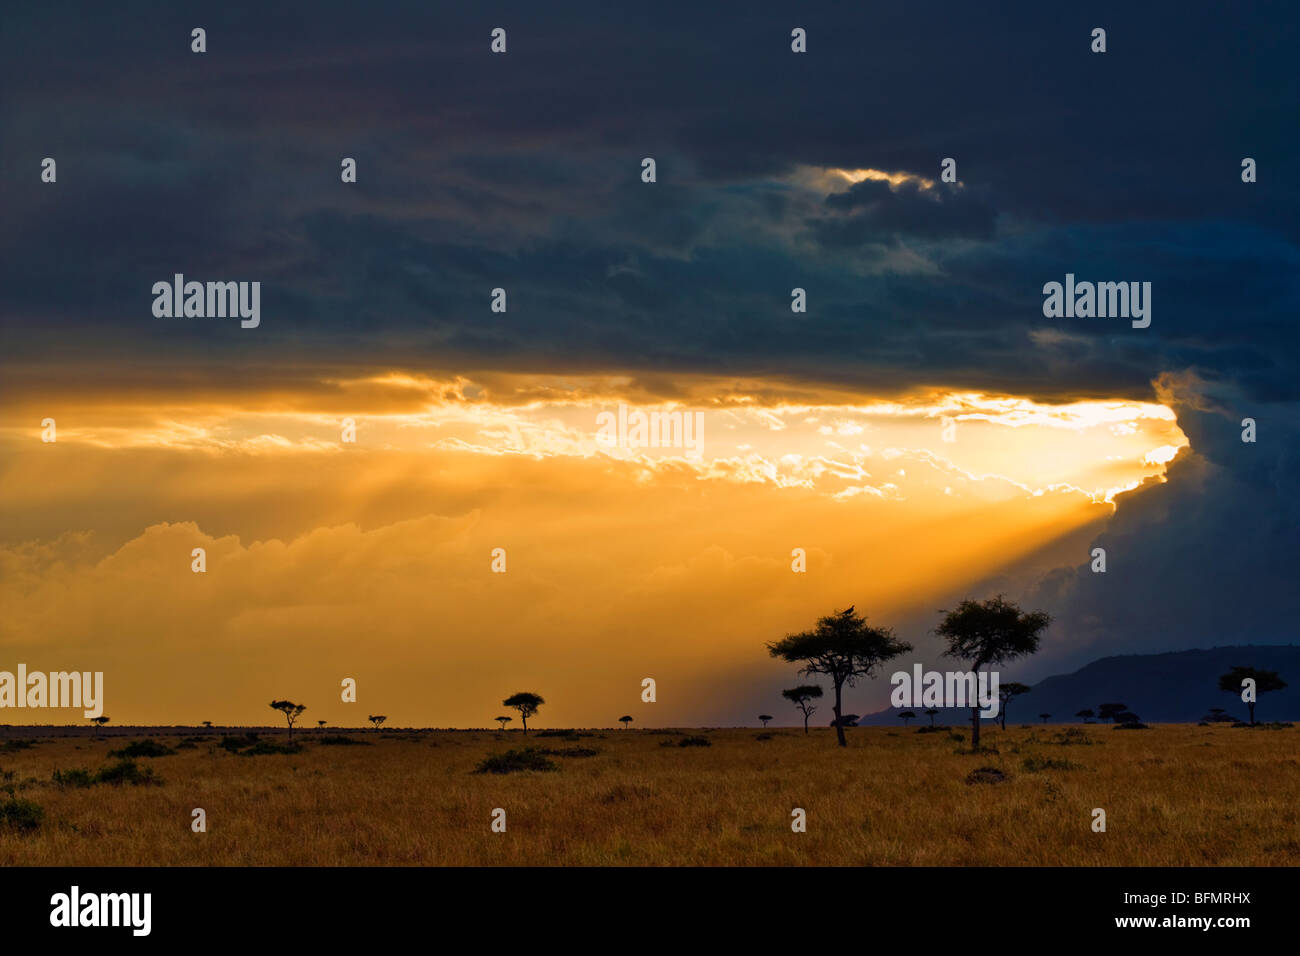 Kenya, Masai Mara. The setting sun breaks through clouds to light up the plains. Stock Photo